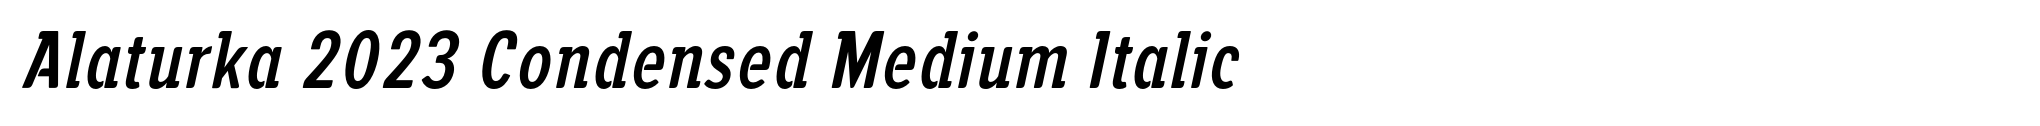 Alaturka 2023 Condensed Medium Italic image